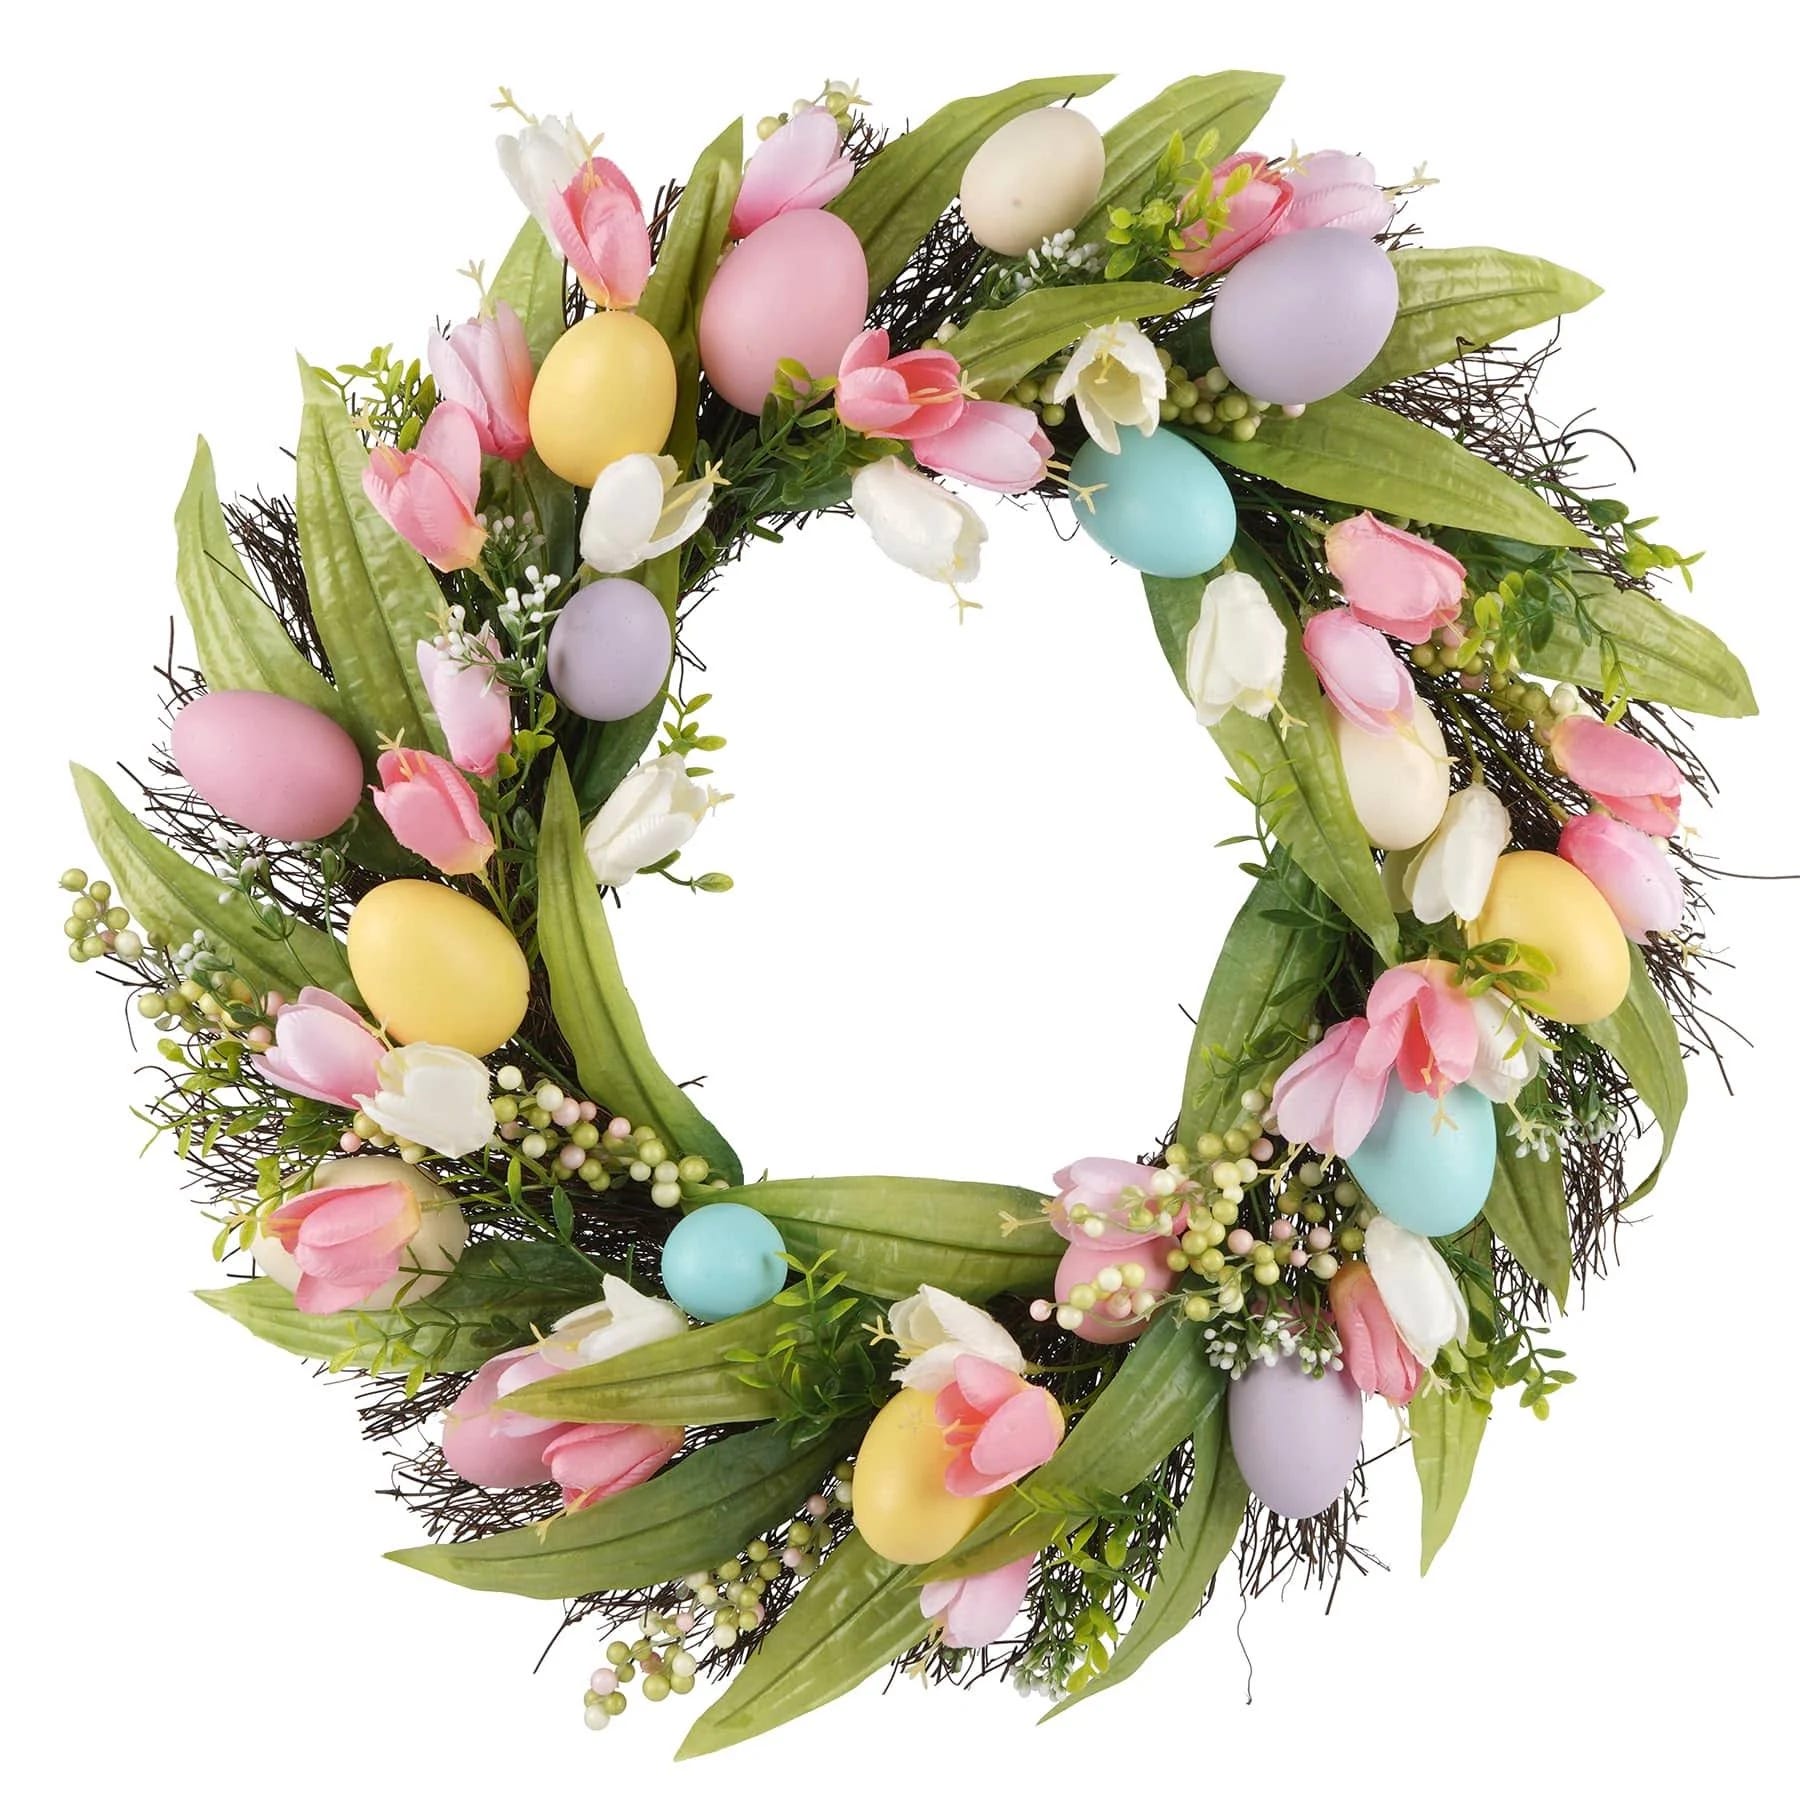 Stunning Easter Egg & Tulip Wreath by Ashland | Image